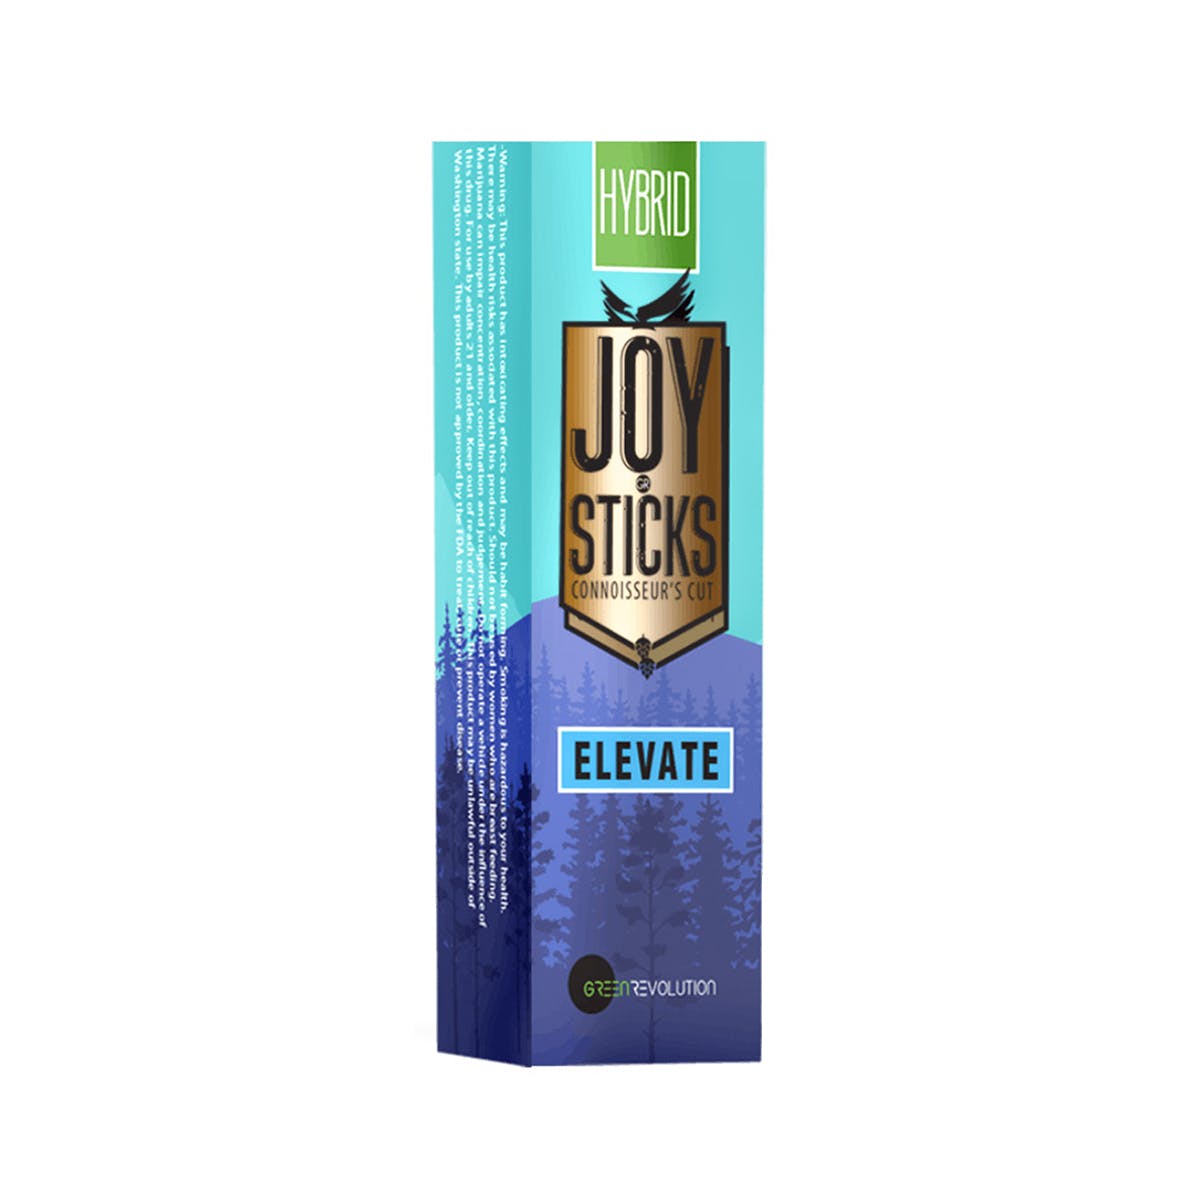 Joysticks - Elevate 2x (1.8g)